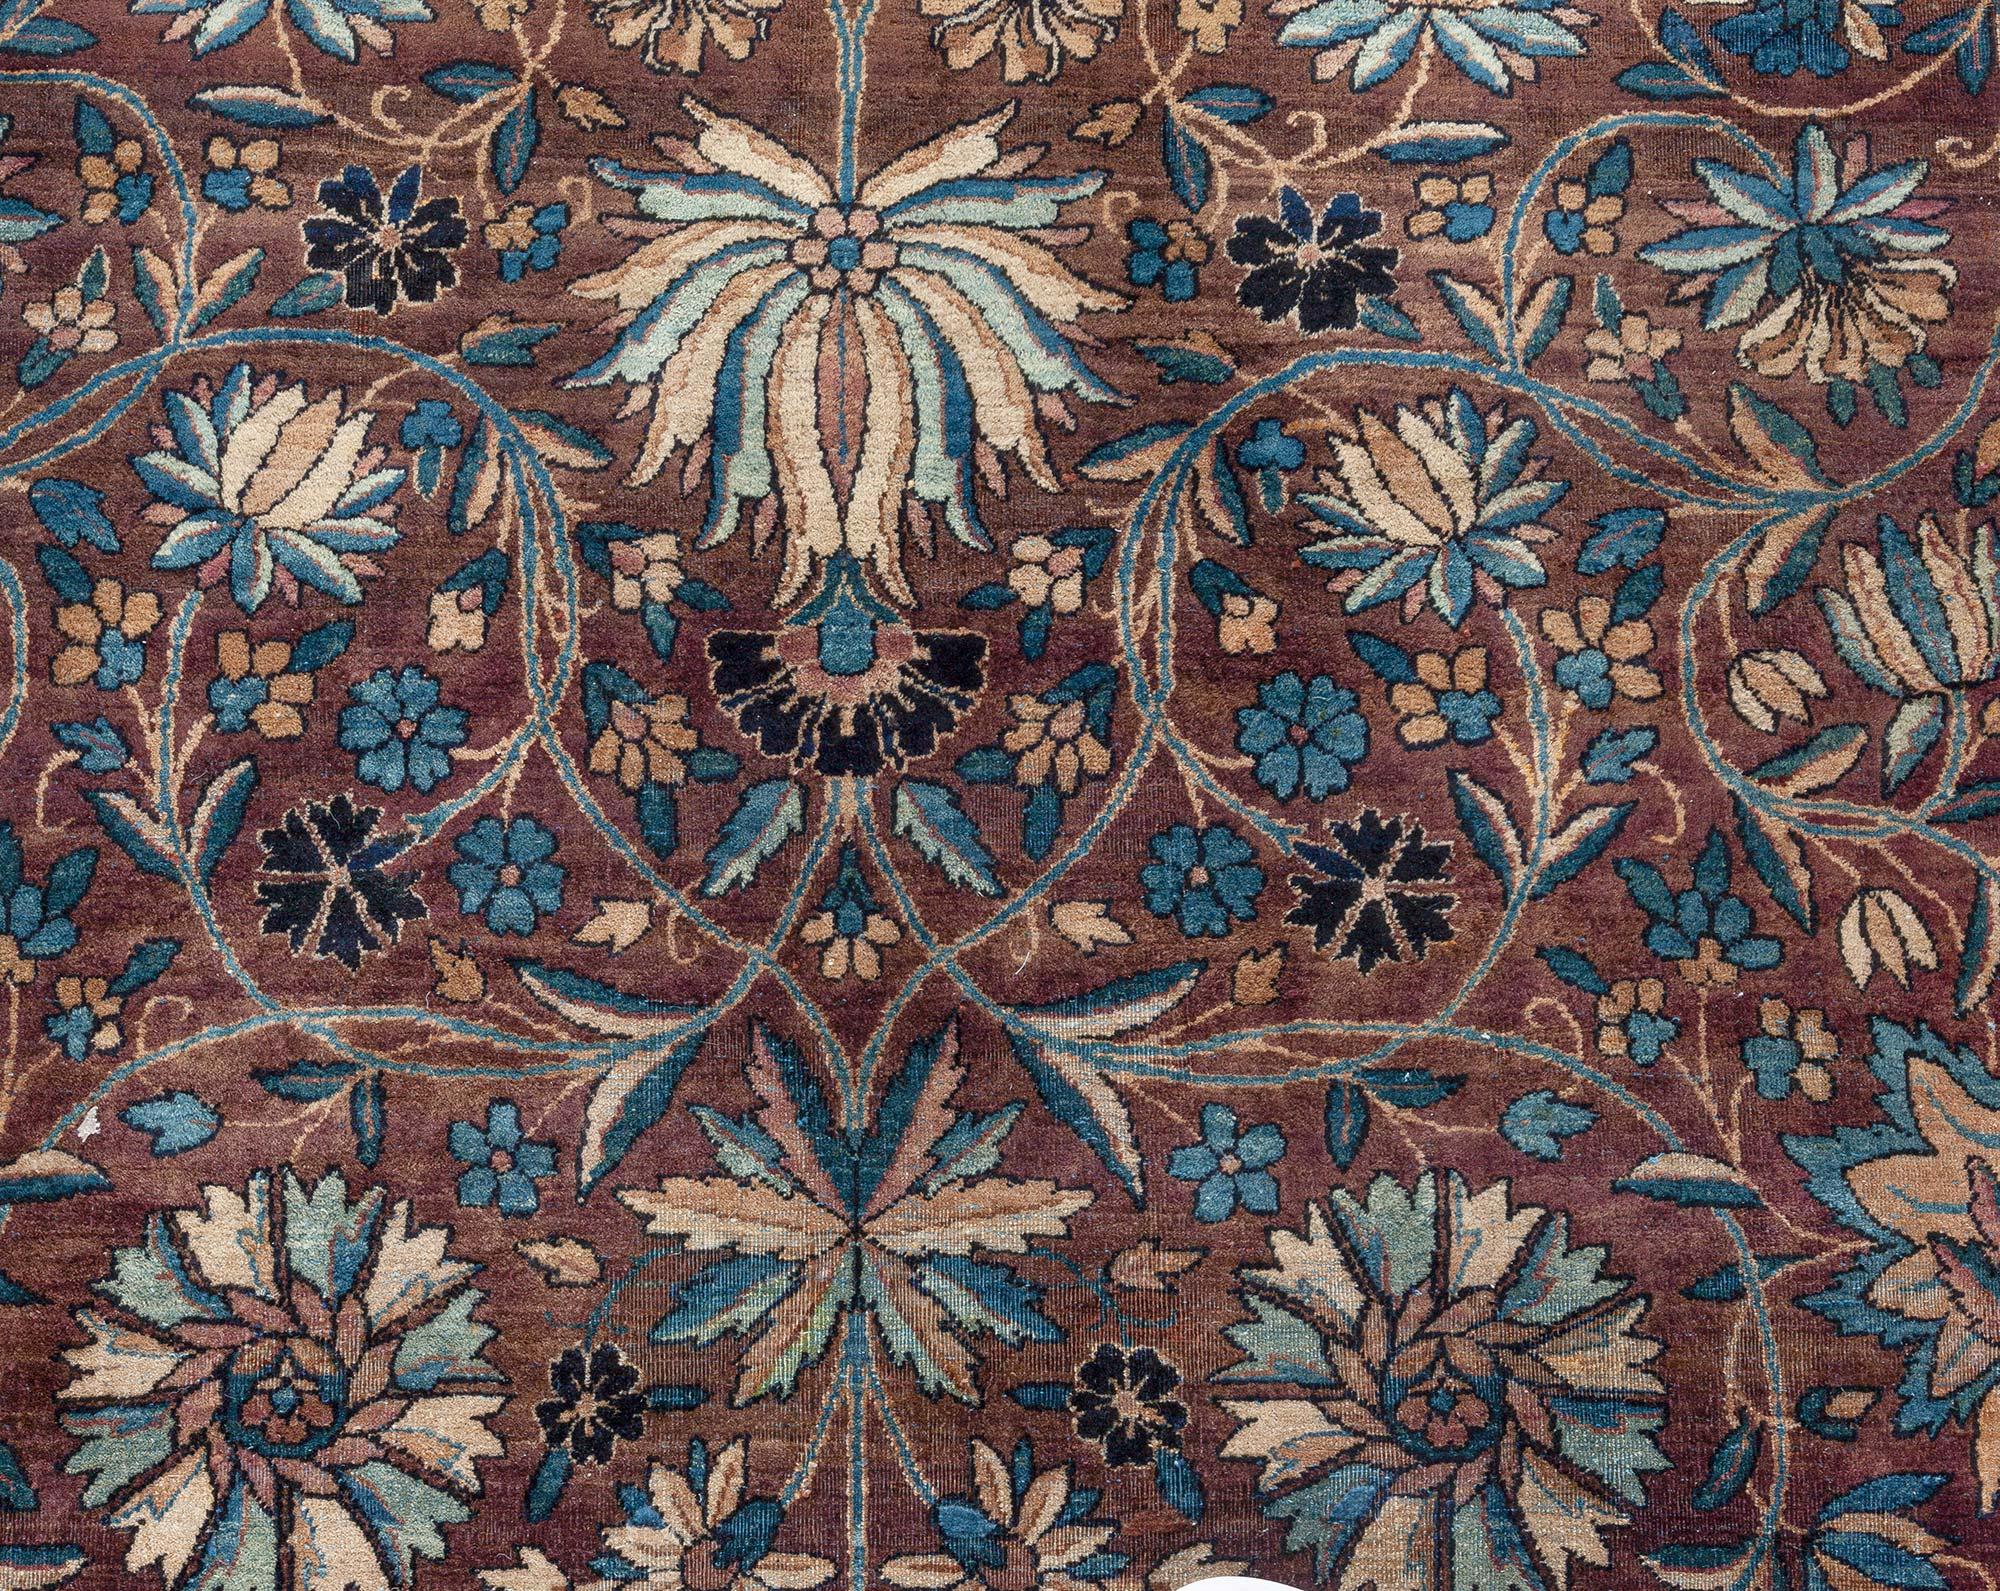 Antique Persian Kirman rug
Size: 10'10